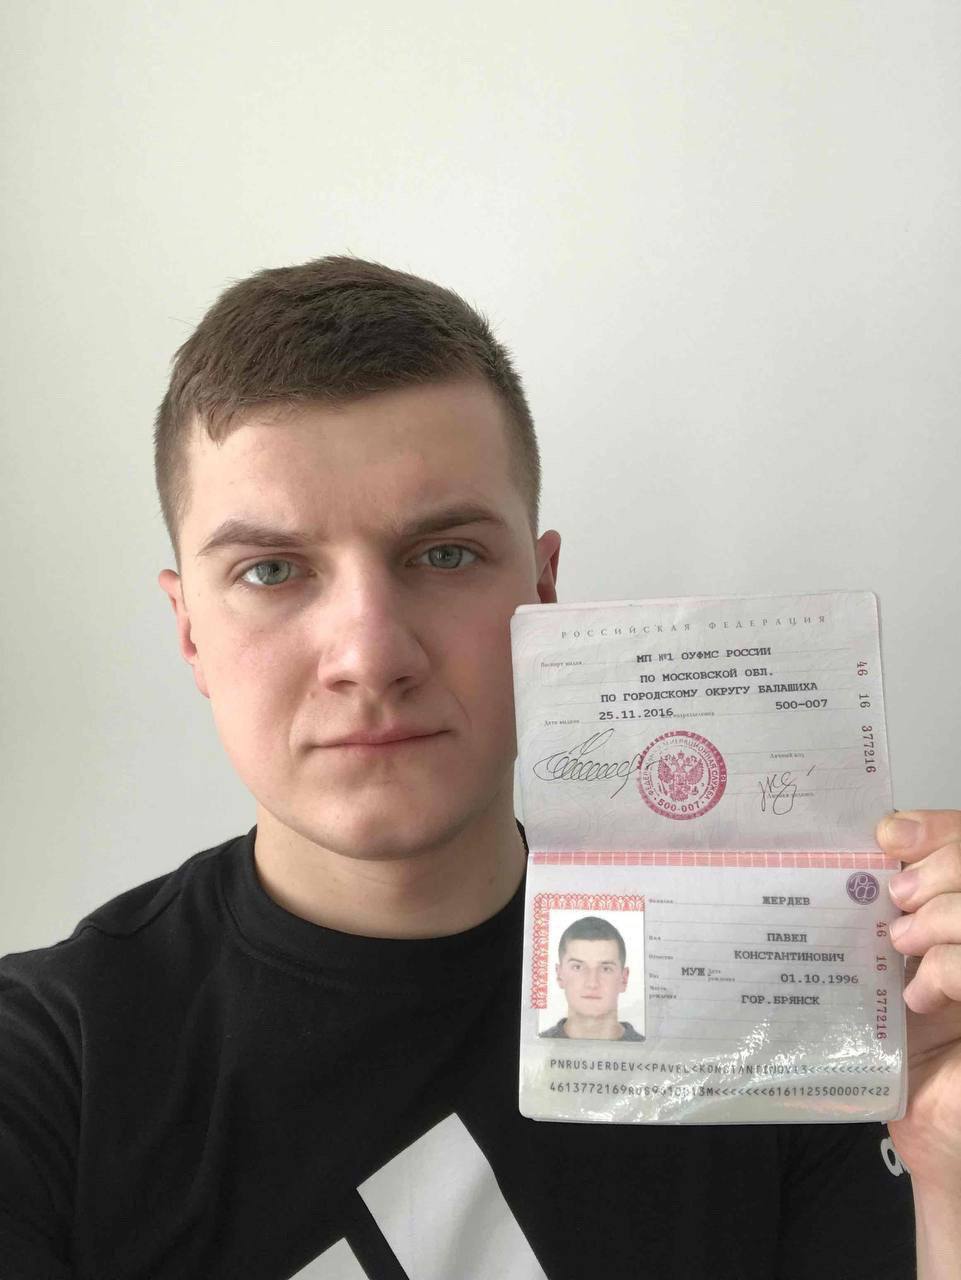 Паспорт РФ С лицом